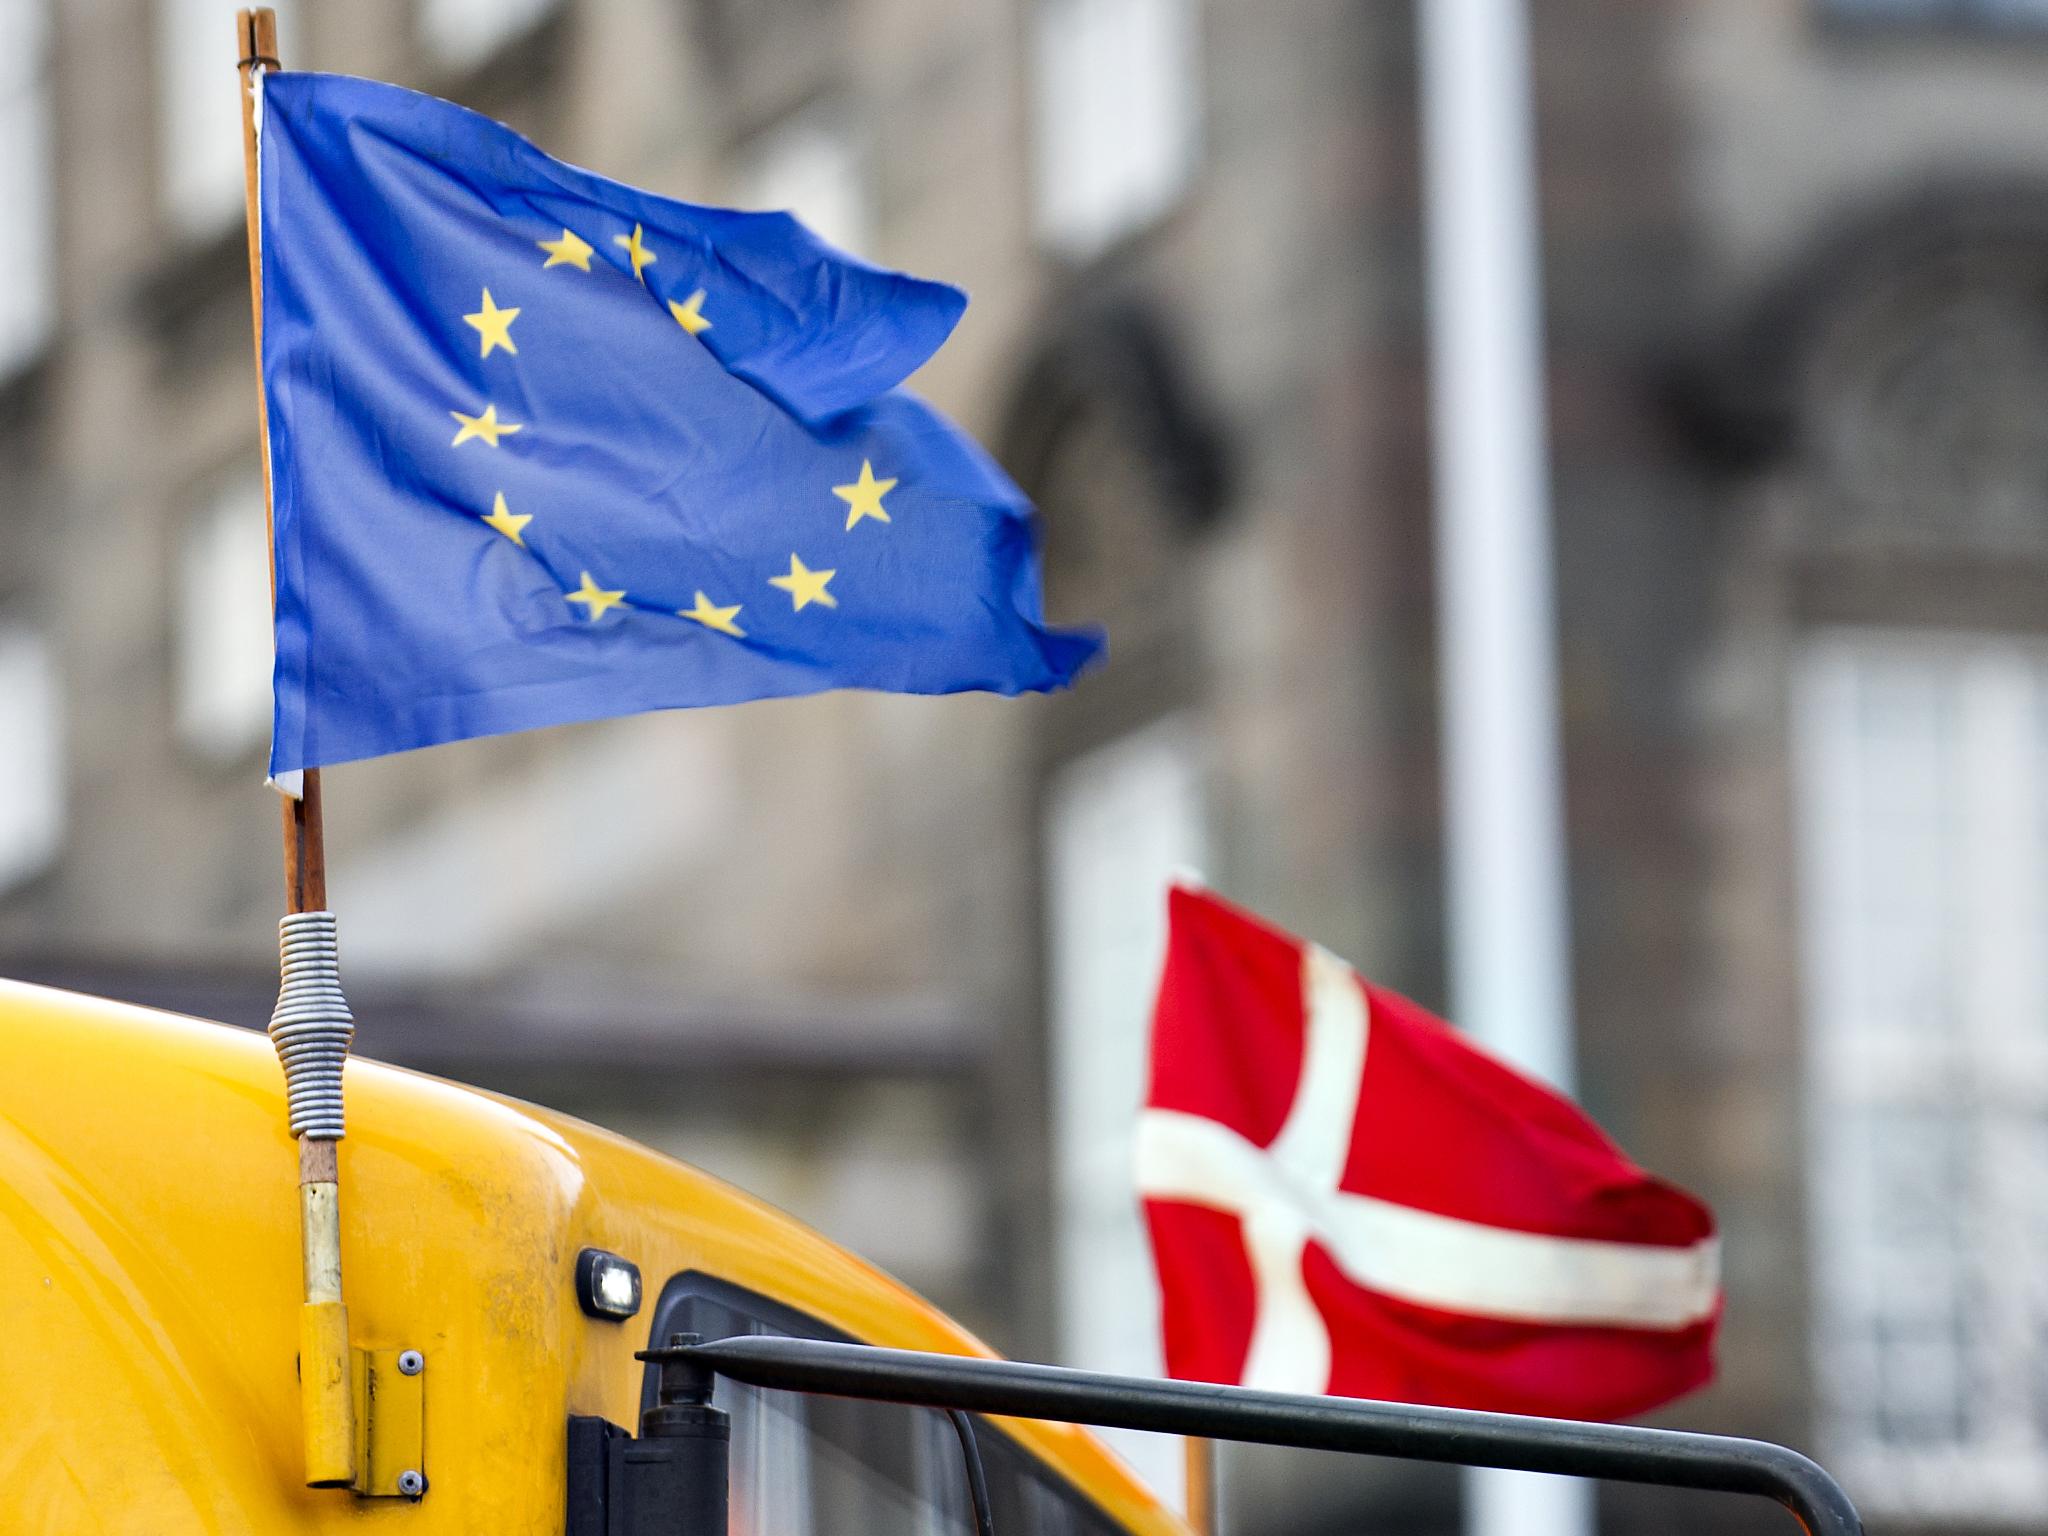 Denmark's president has ruled out having a referendum on EU membership